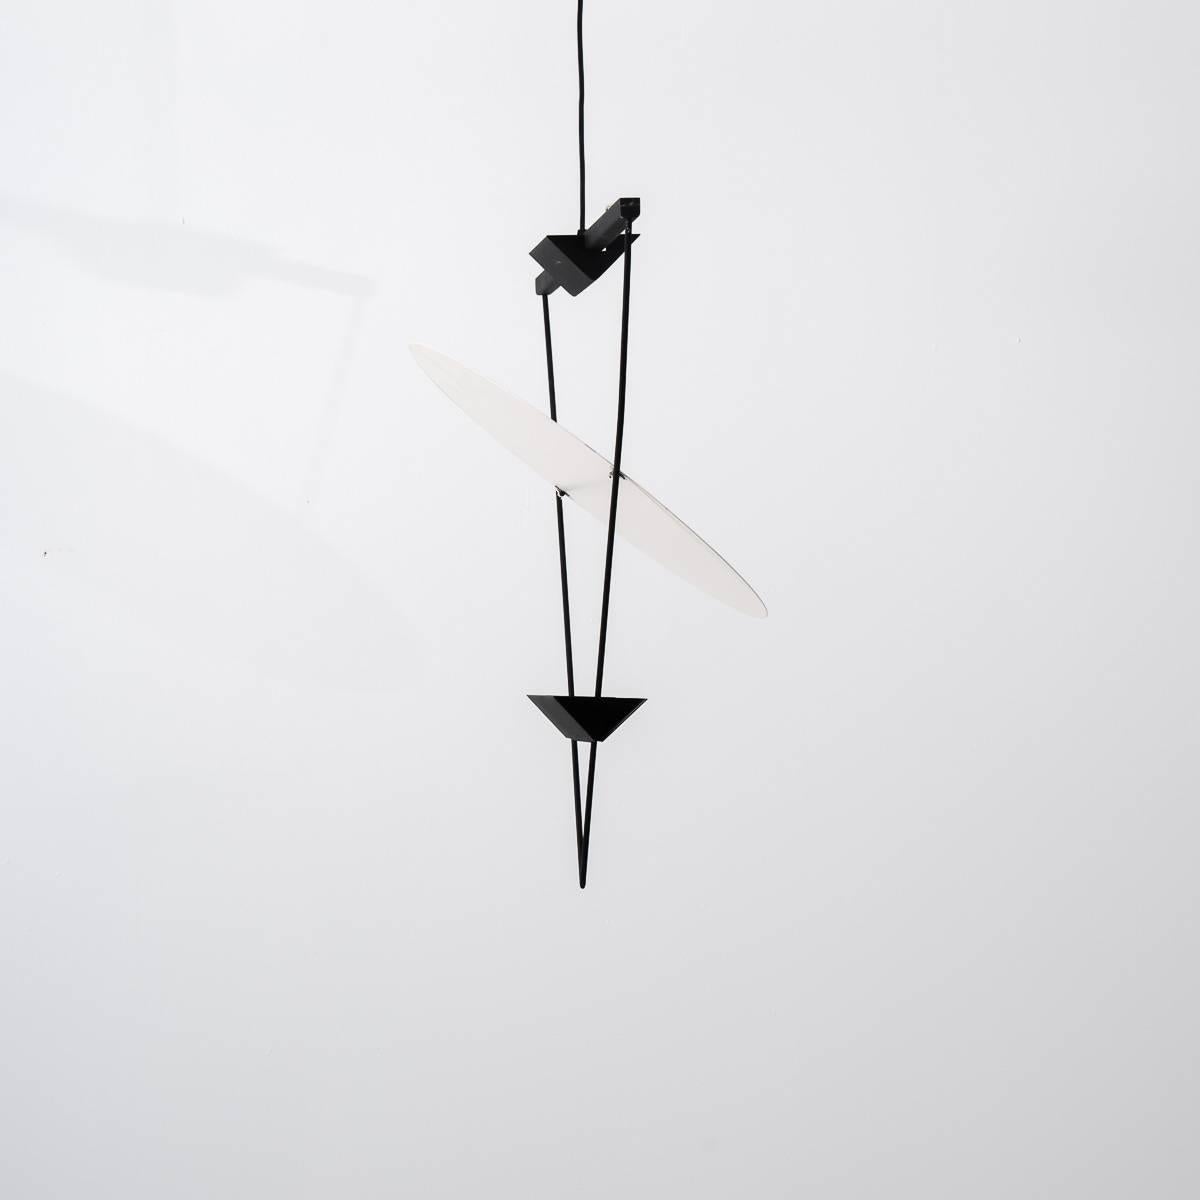 Lacquered Mario Botta Inverted Triangle Lamp, Artemide, 1985